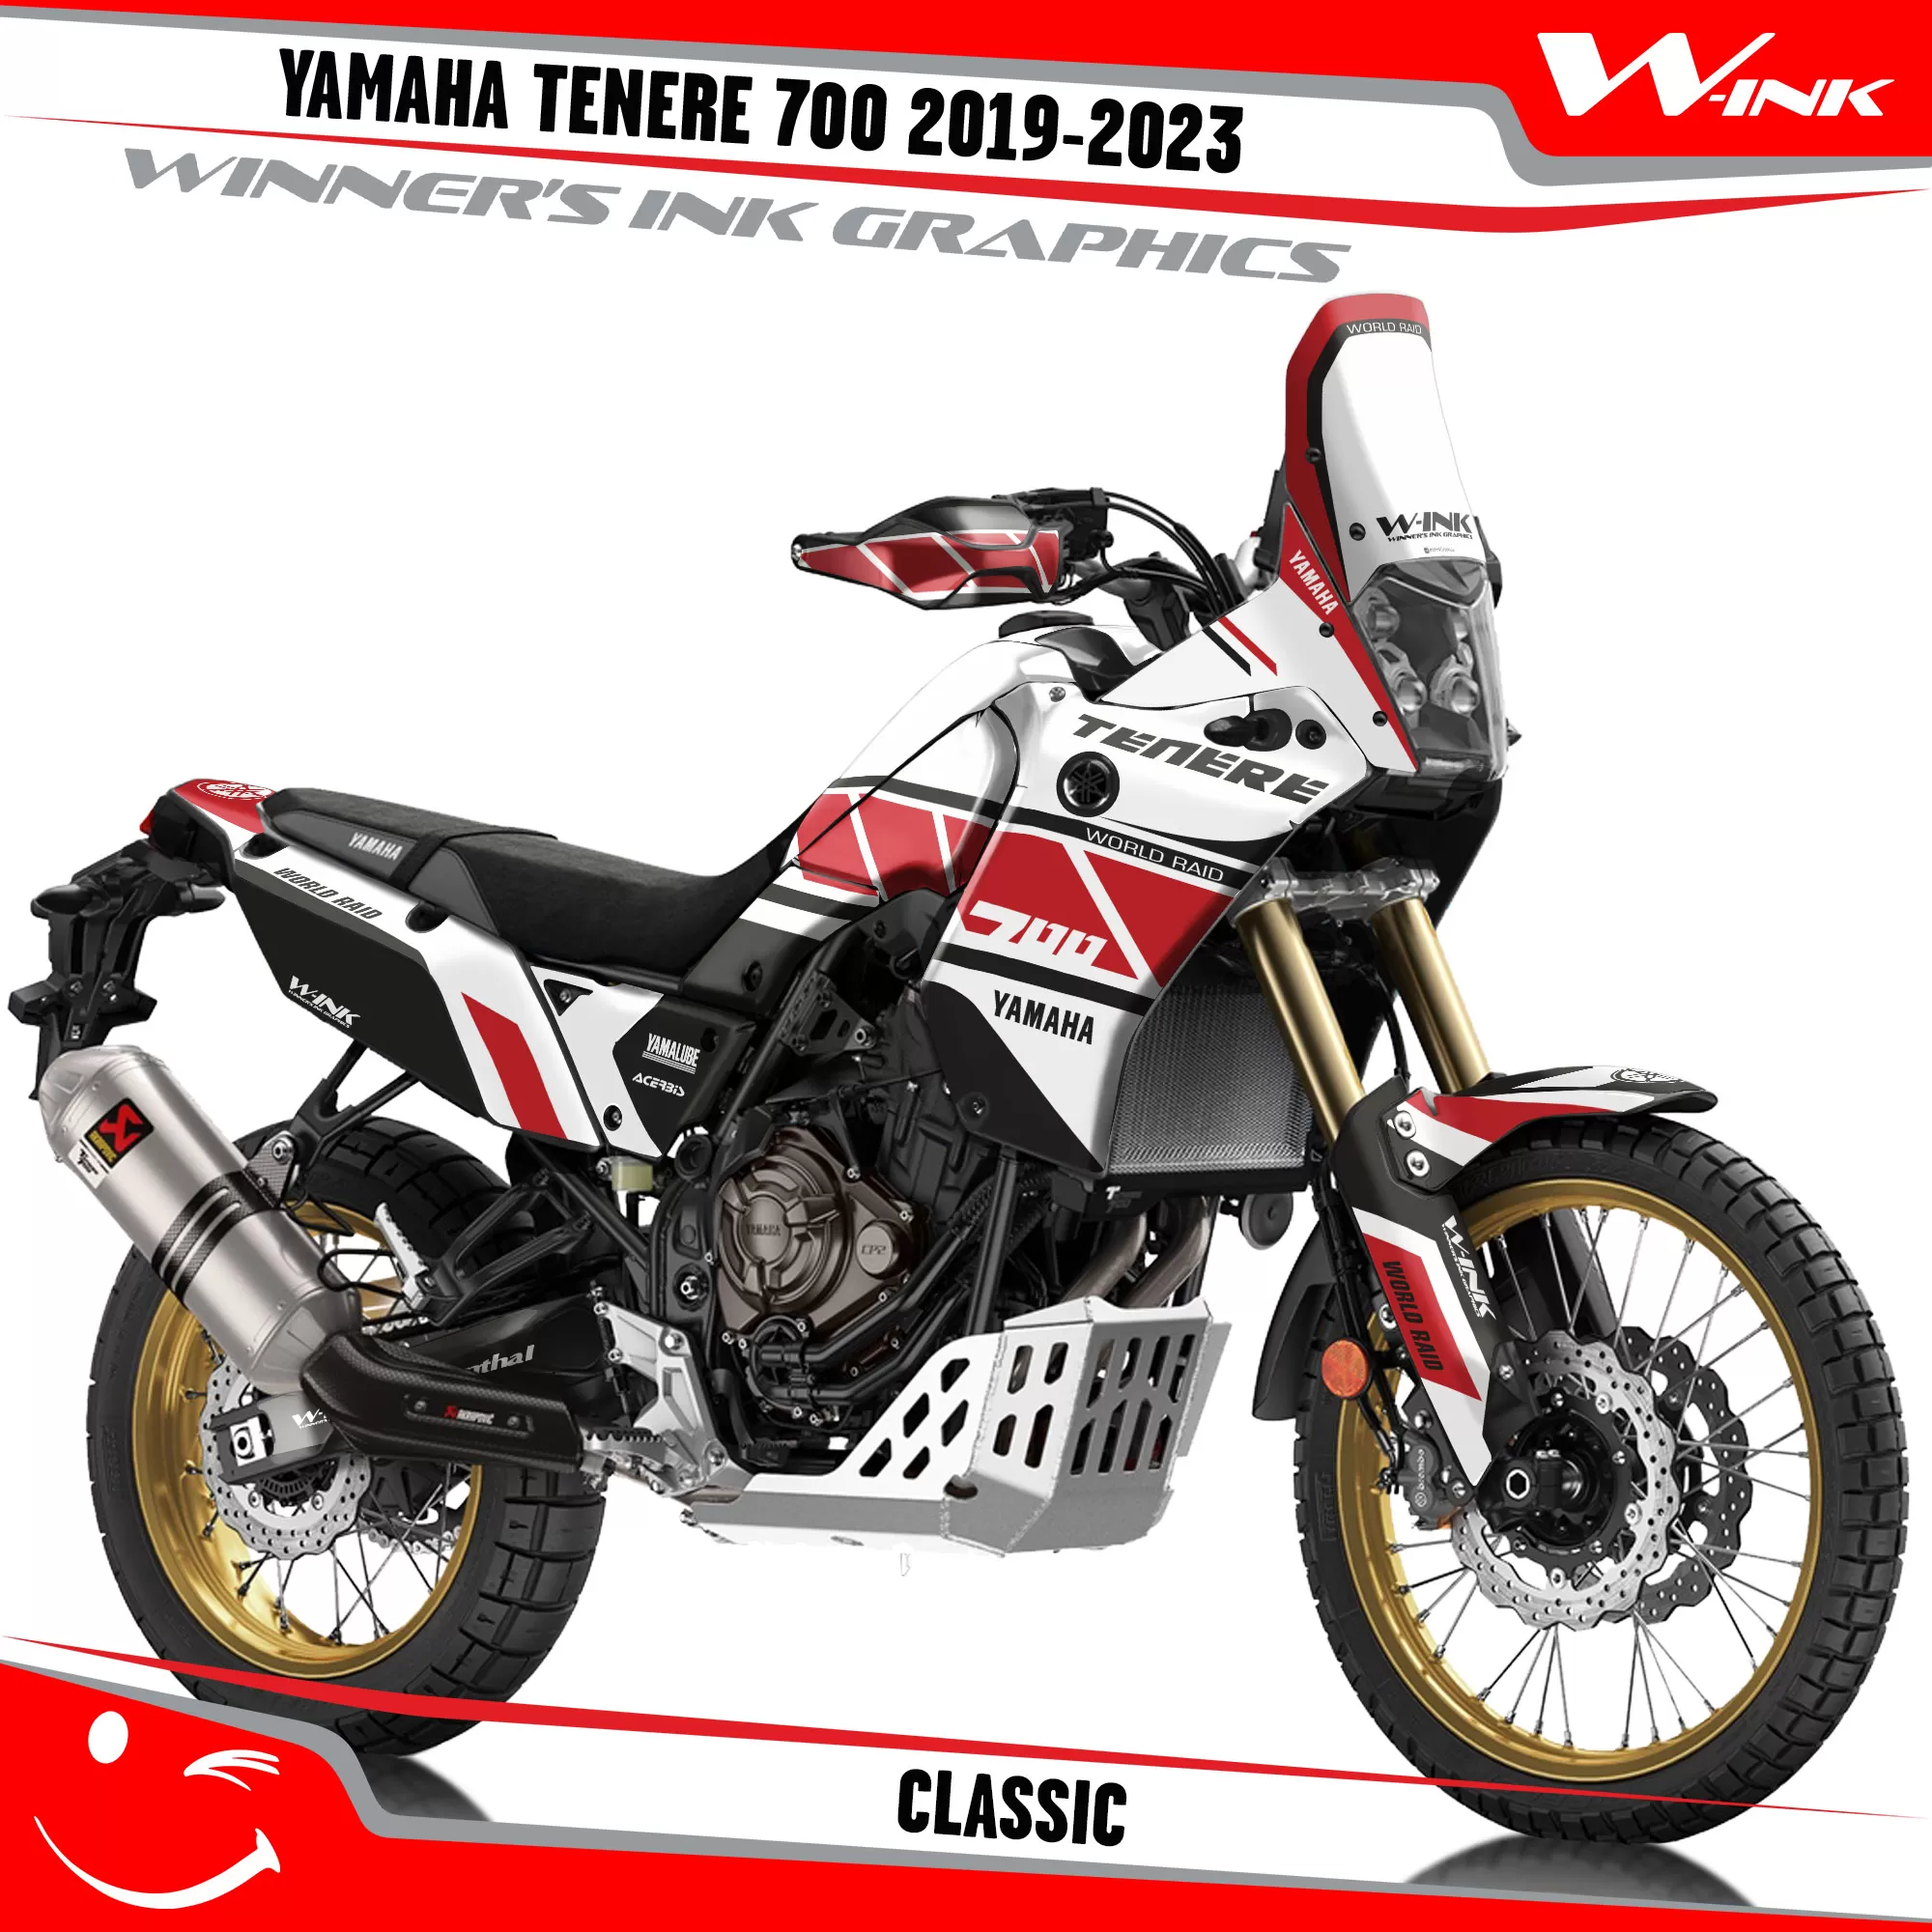 2021 Yamaha Ténéré 700 Is Brilliant - Motorcycle Review